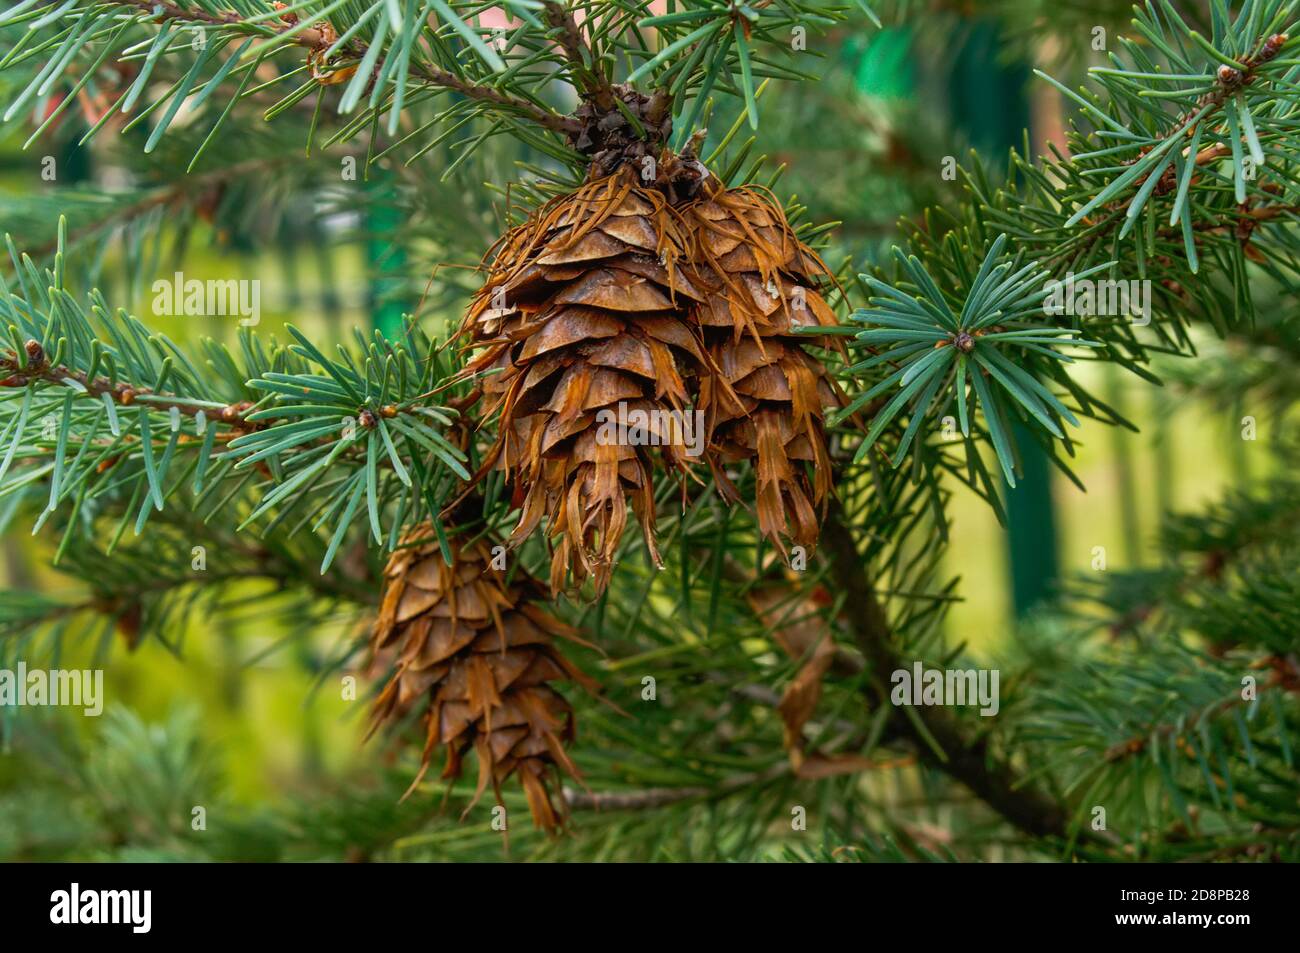 Douglas fir, pseudotsuga menziesii, coniferous tree, cones on branches Stock Photo